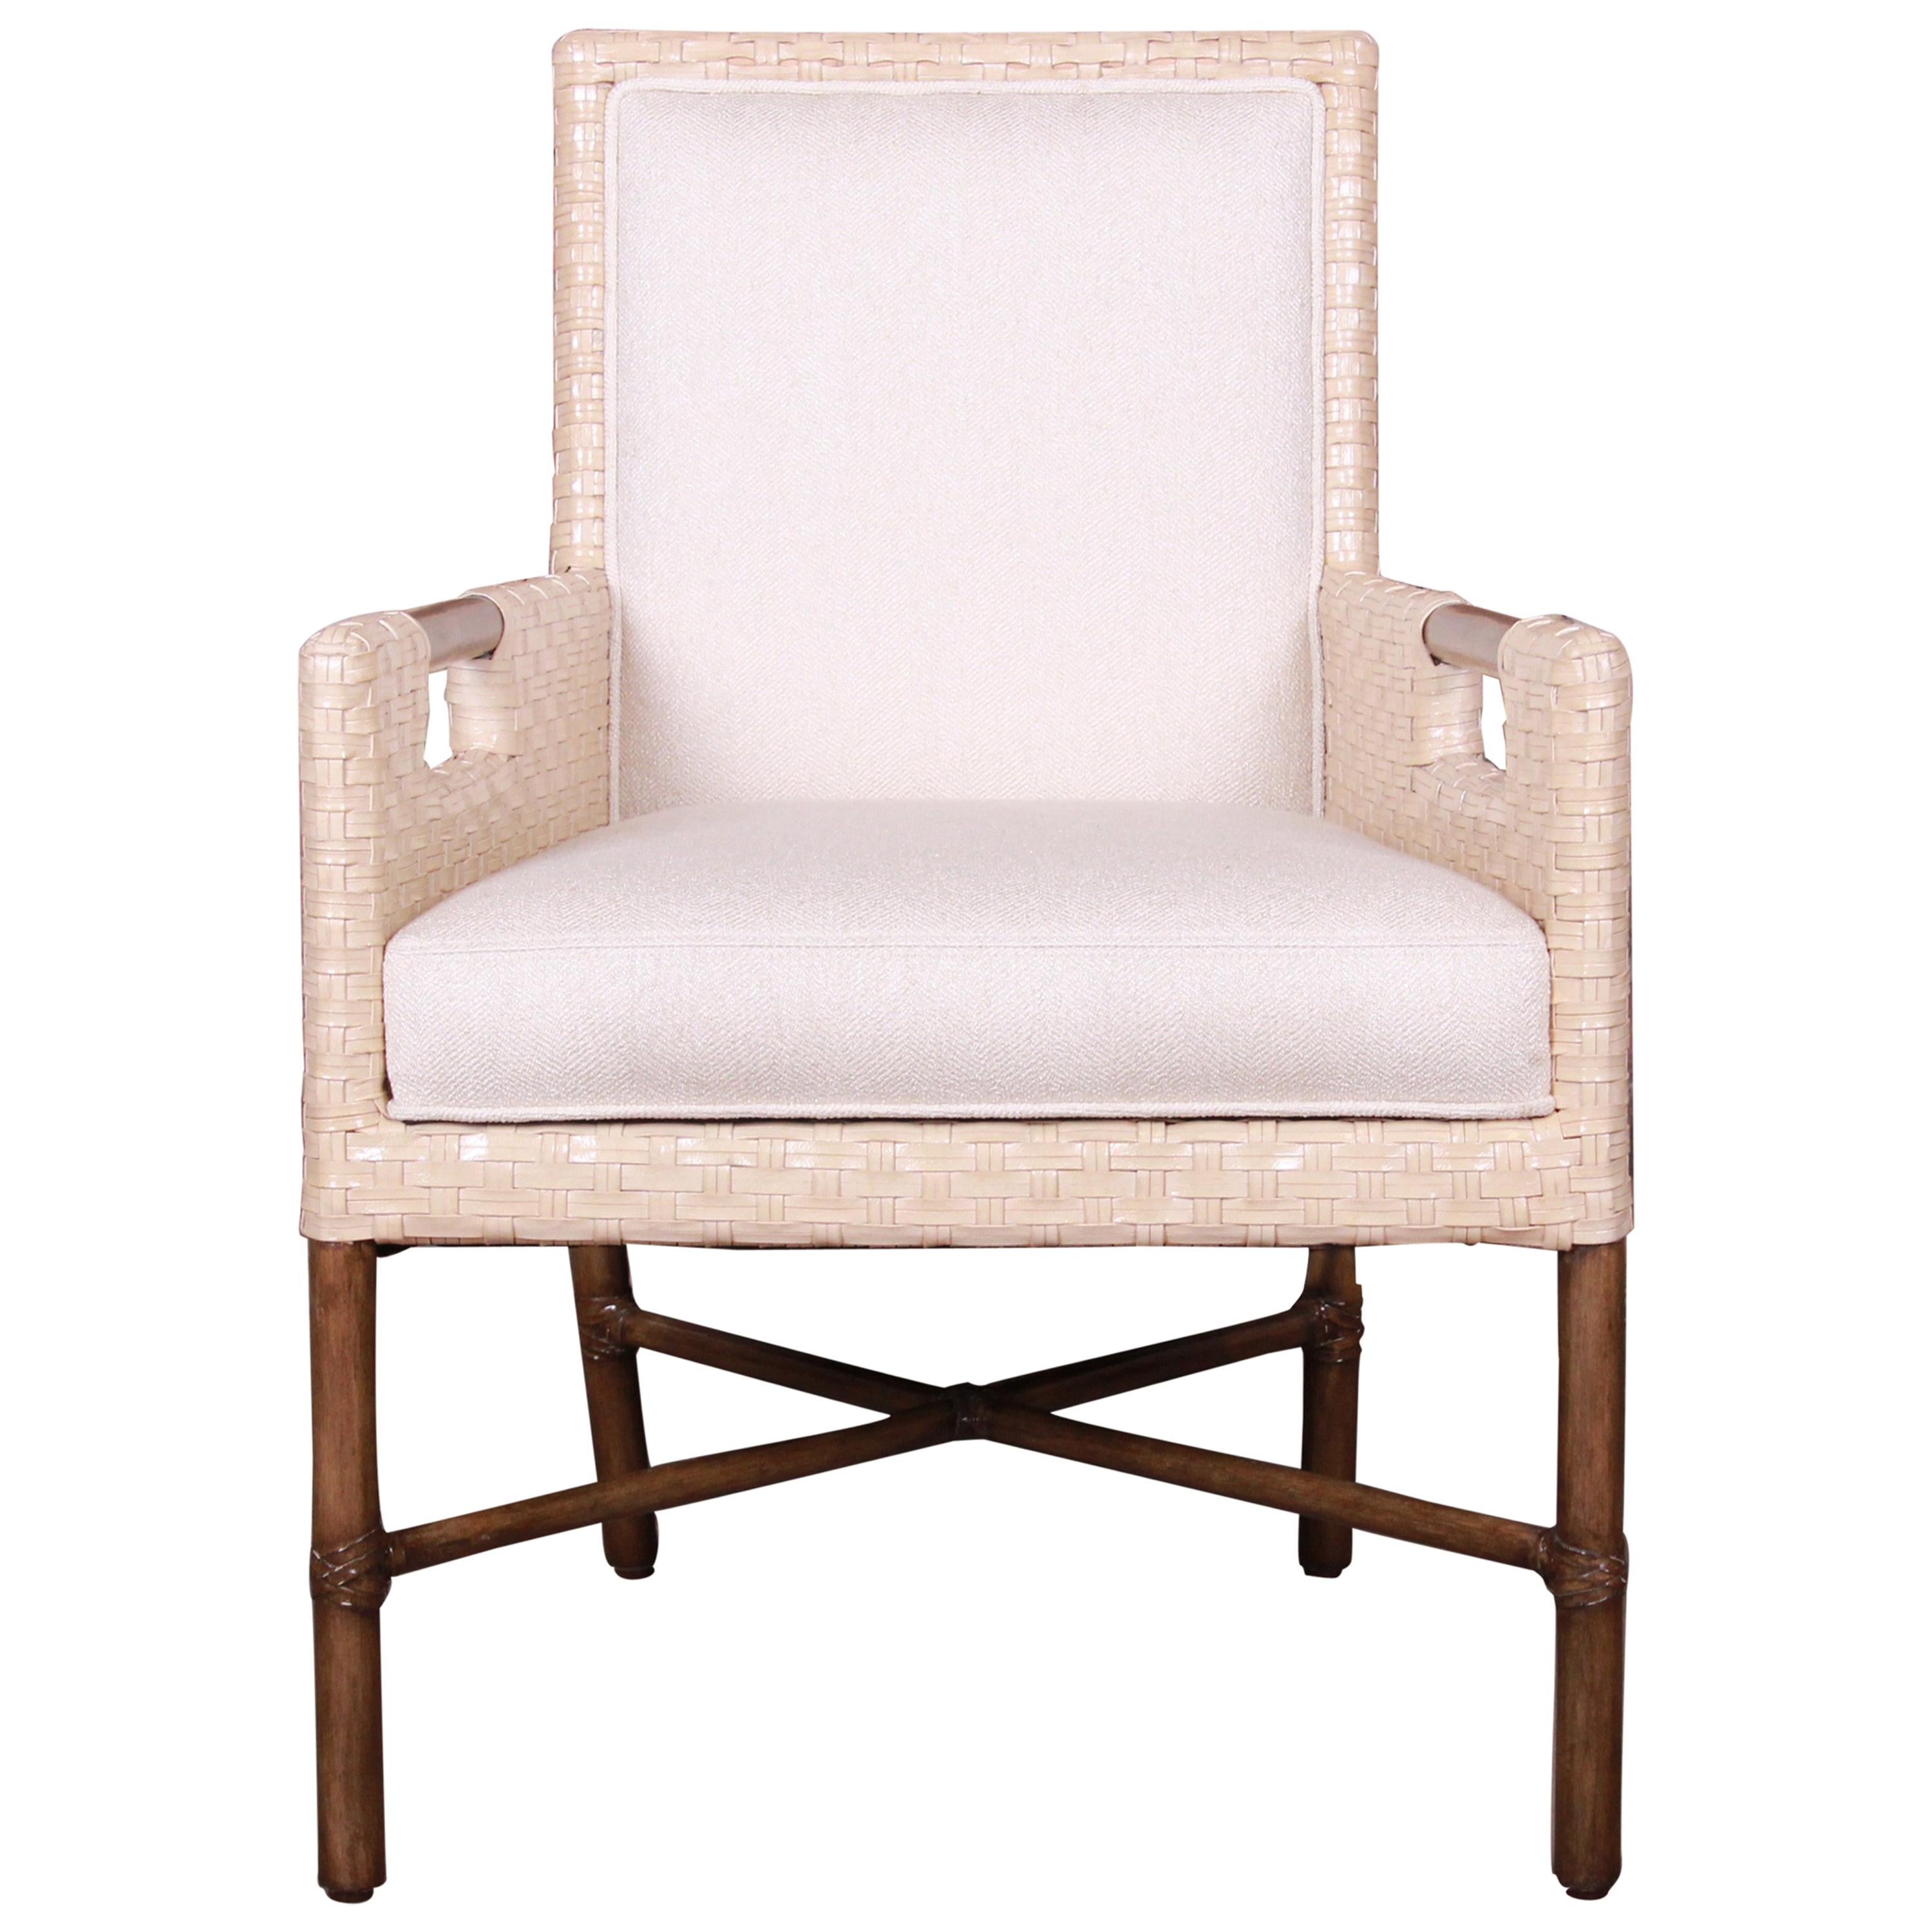 McGuire Organic Modern Woven Bamboo Rattan and Hardwood Lounge Chair